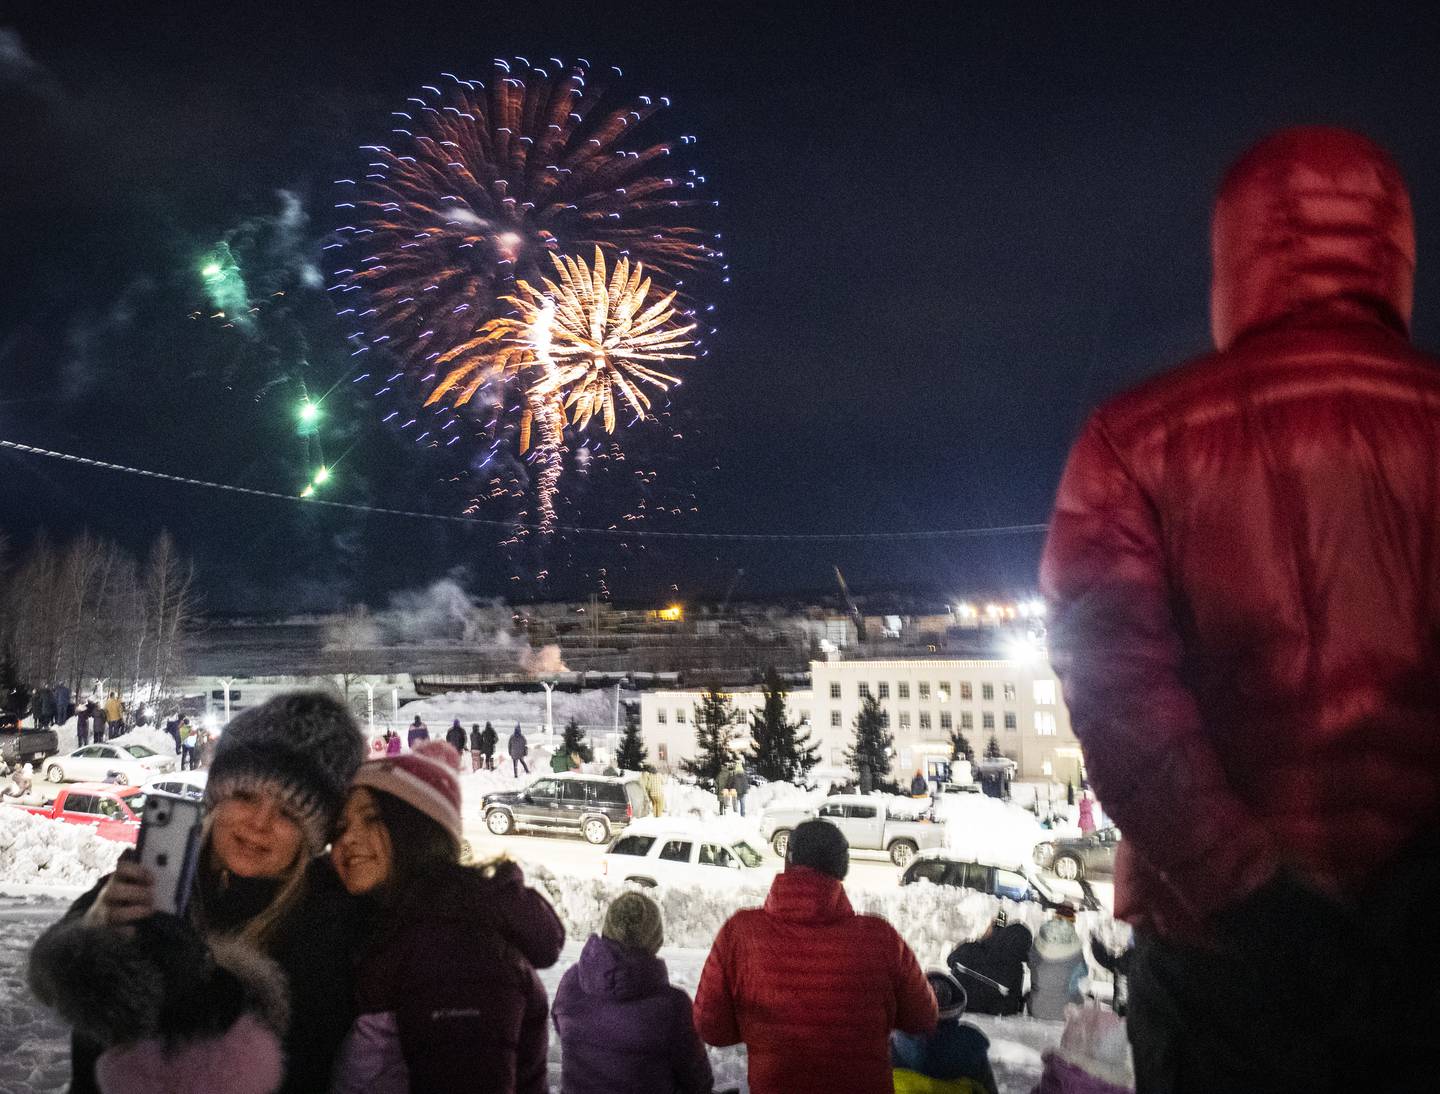 December, winter, New Year's Eve, fireworks